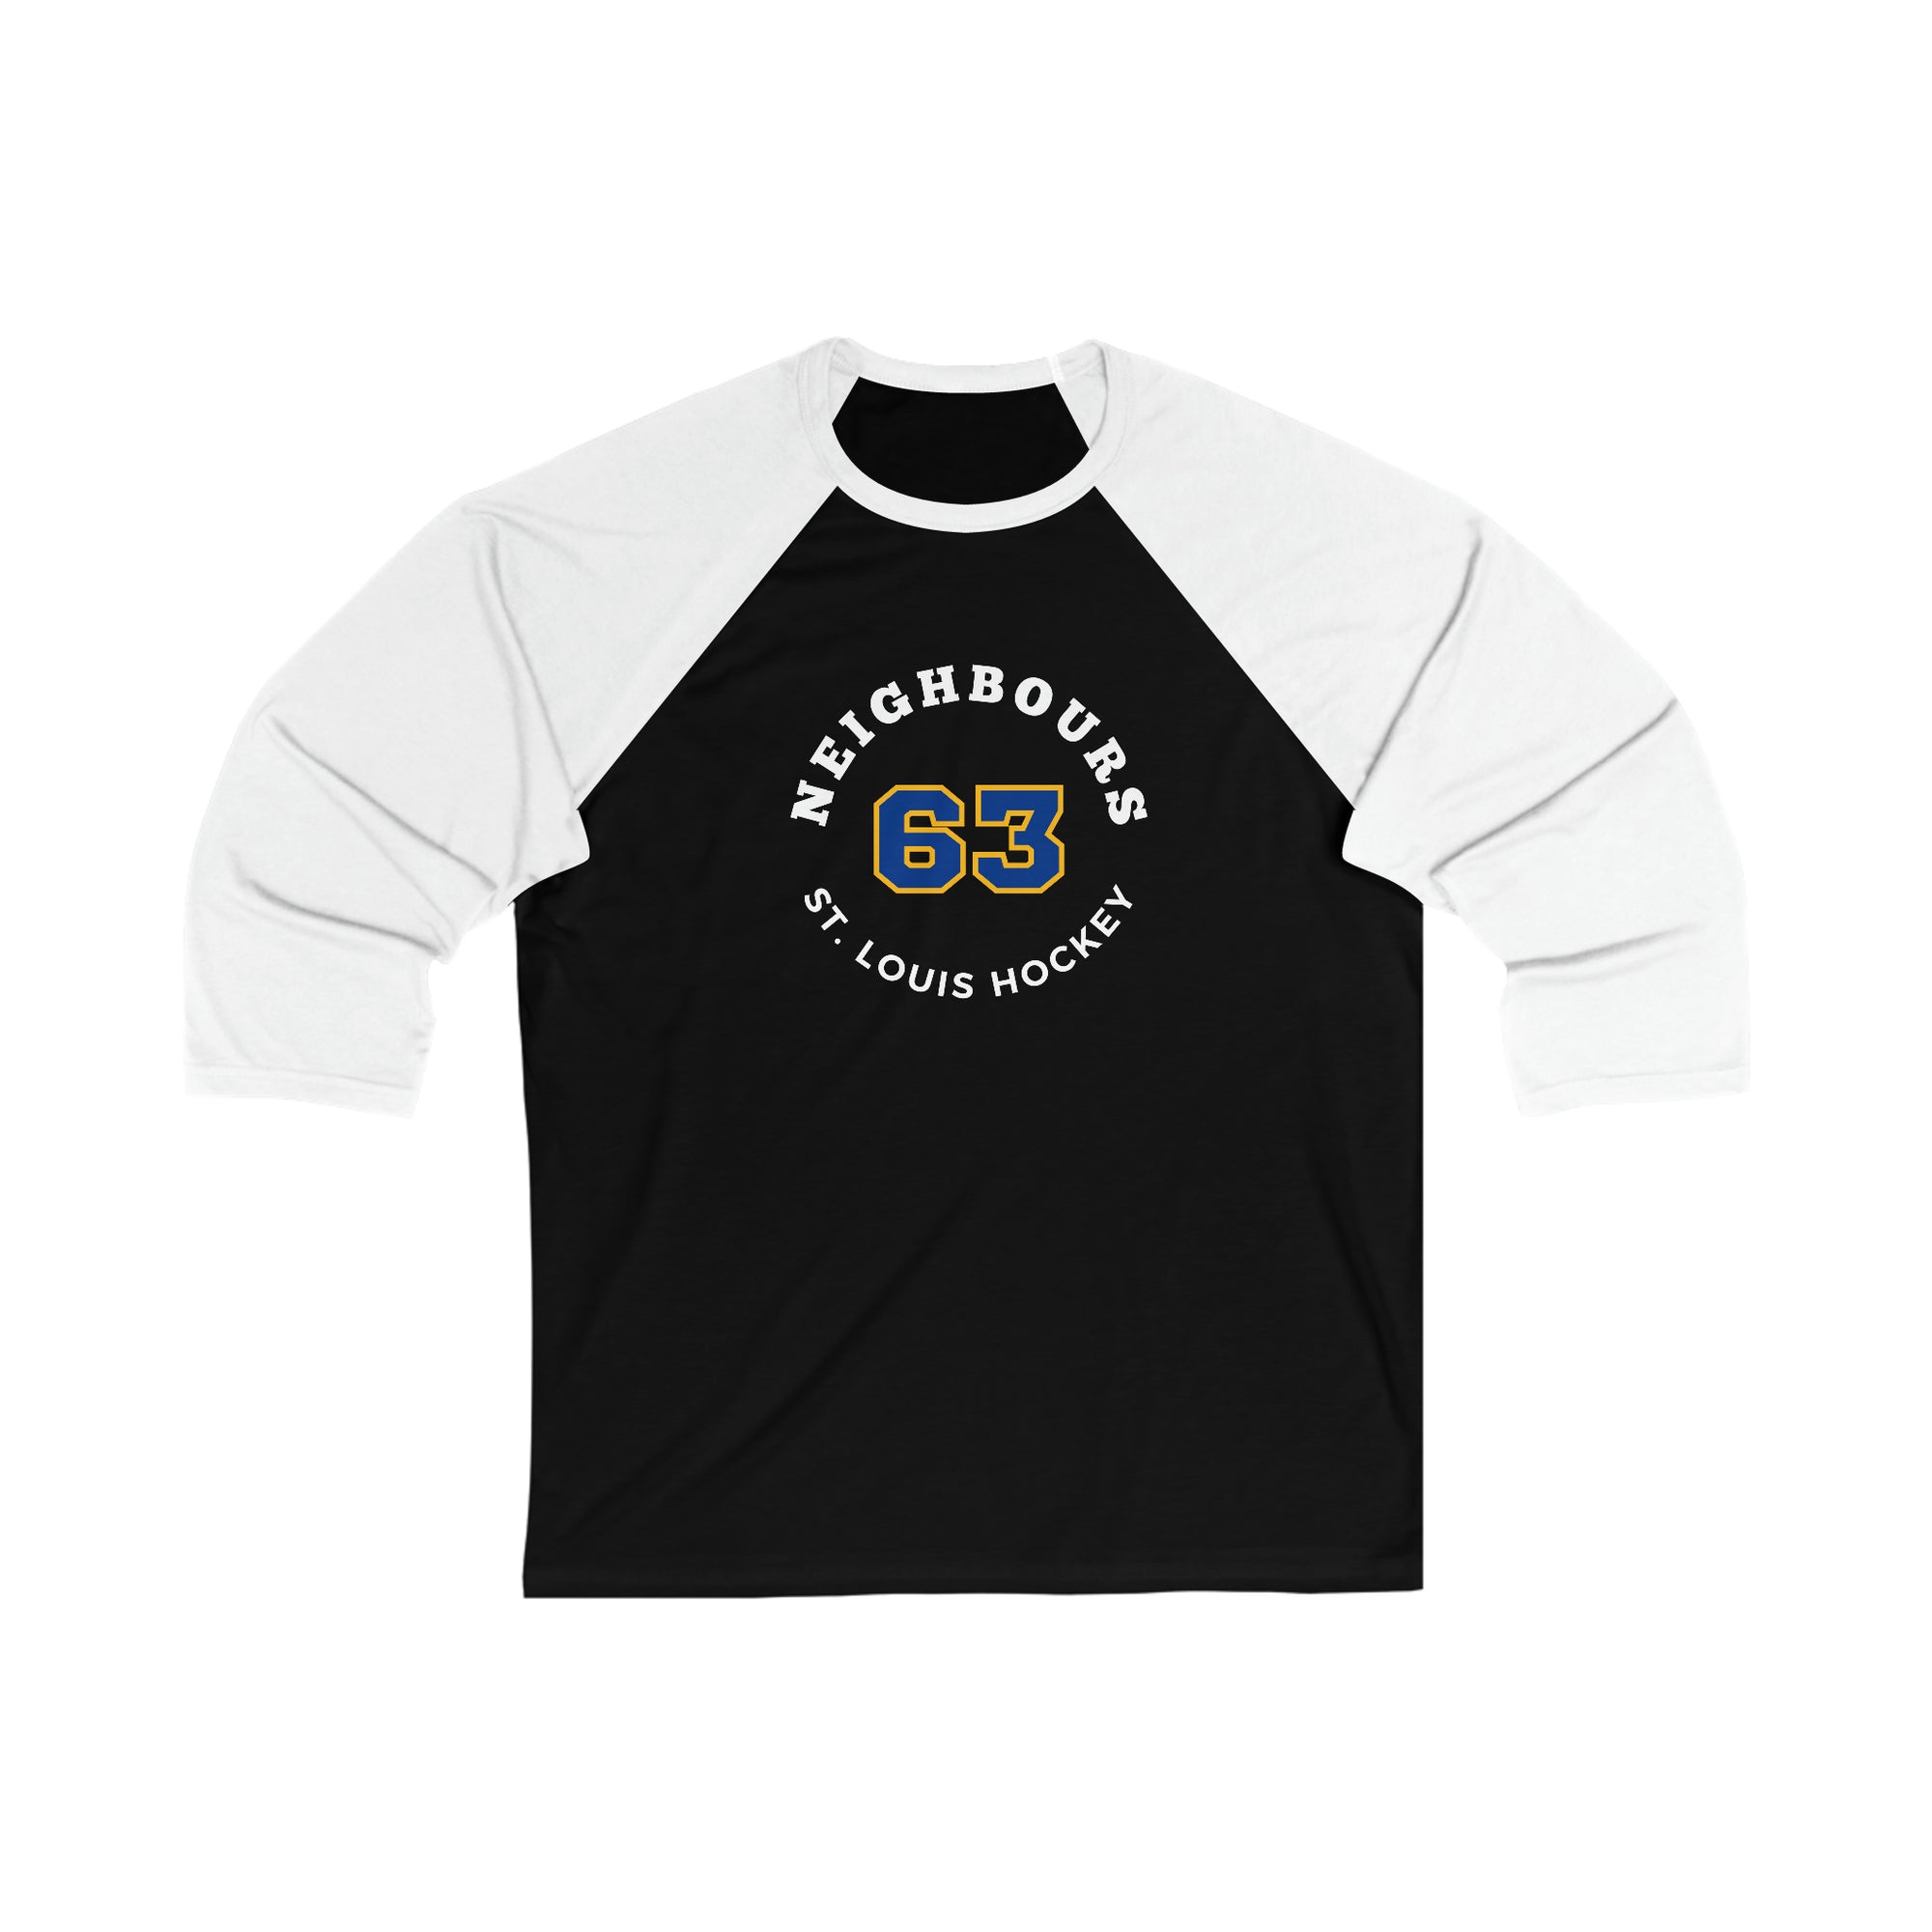 Neighbours 63 St. Louis Hockey Number Arch Design Unisex Tri-Blend 3/4 Sleeve Raglan Baseball Shirt